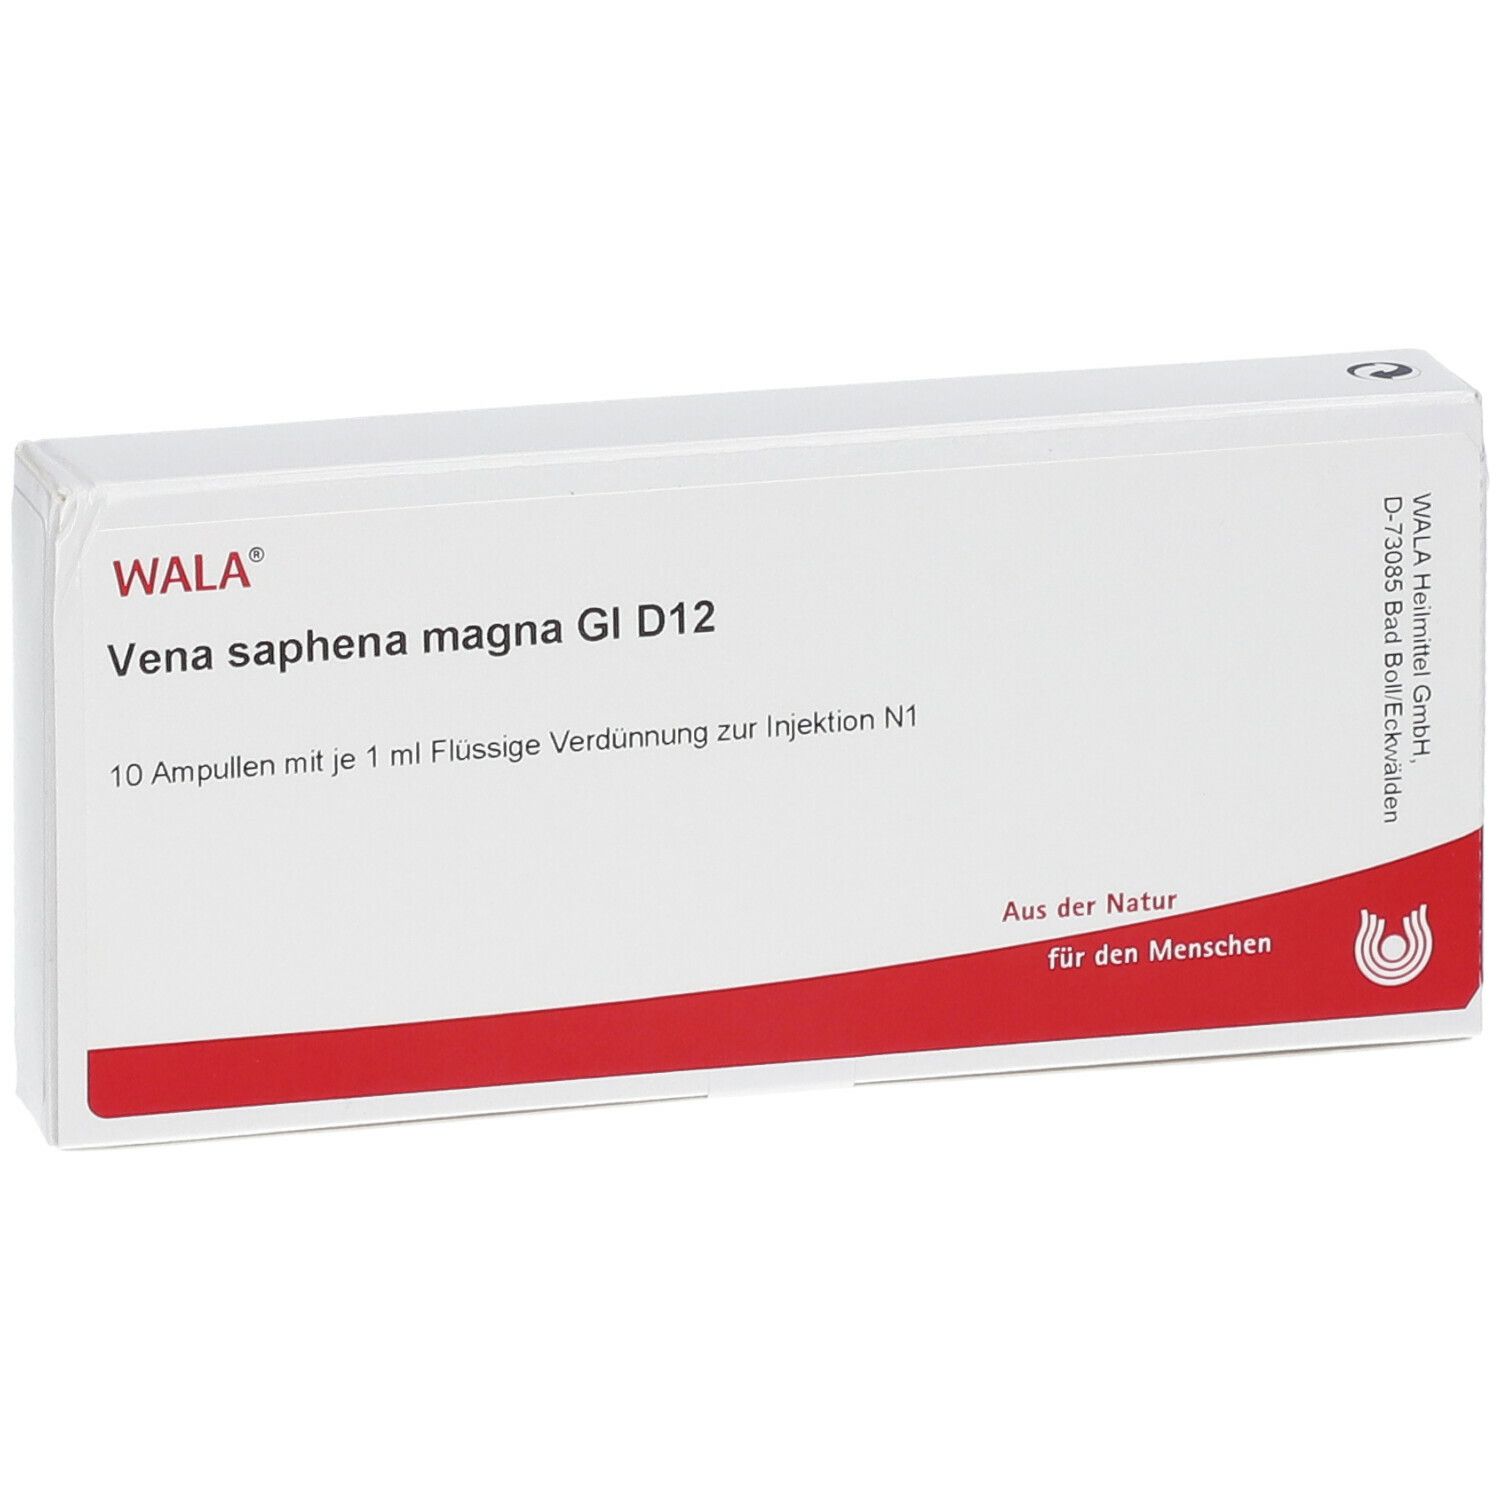 WALA® Vena saphena magna Gl D 12